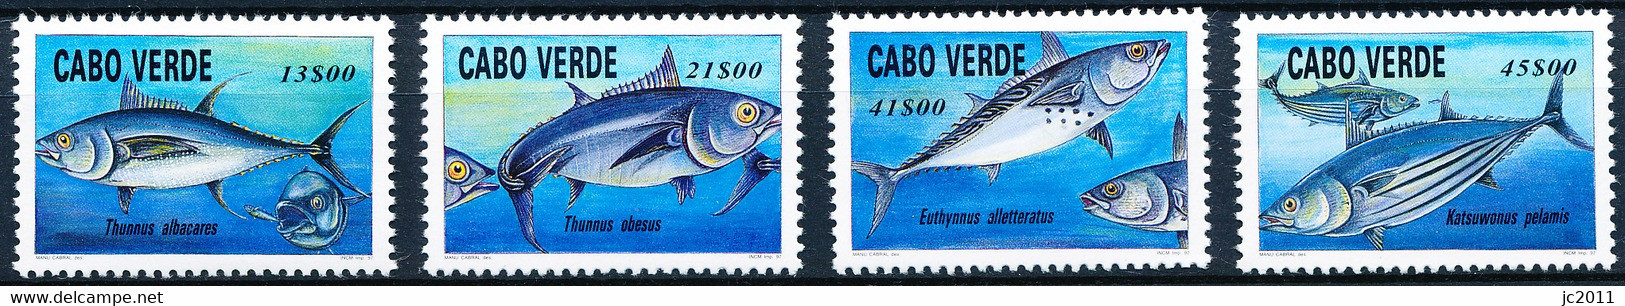 Cabo Verde - 1997 - Tuna Fish - MNH - Kap Verde